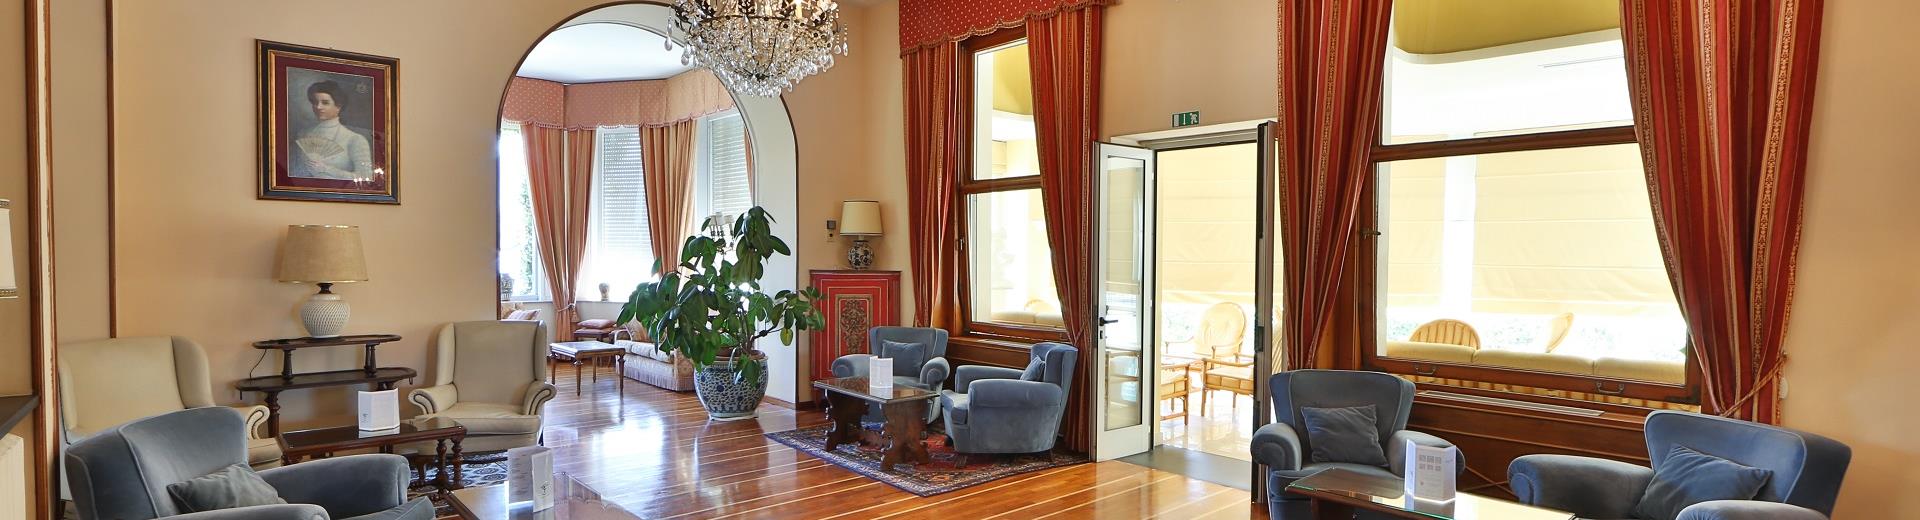 Choose our hotel 4 star hotel in Santa Margherita Ligure